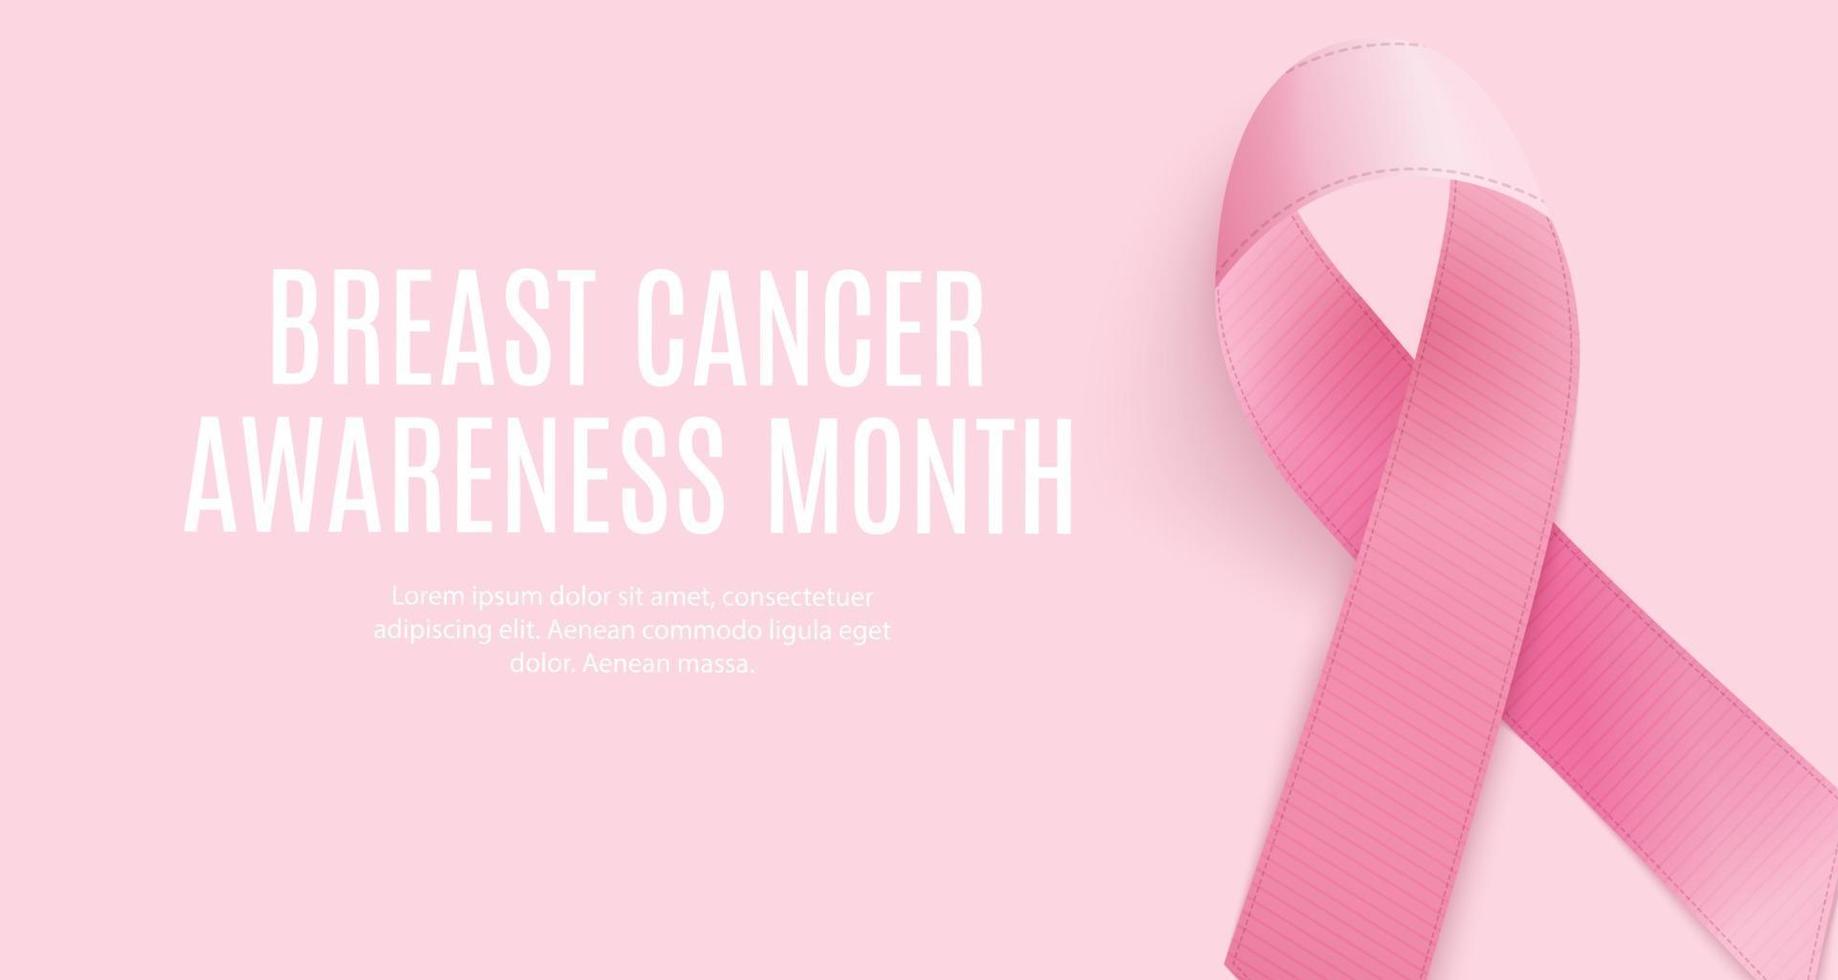 Brustkrebsbewusstsein Monat rosa Band Hintergrund Vektor-Illustration pink vektor